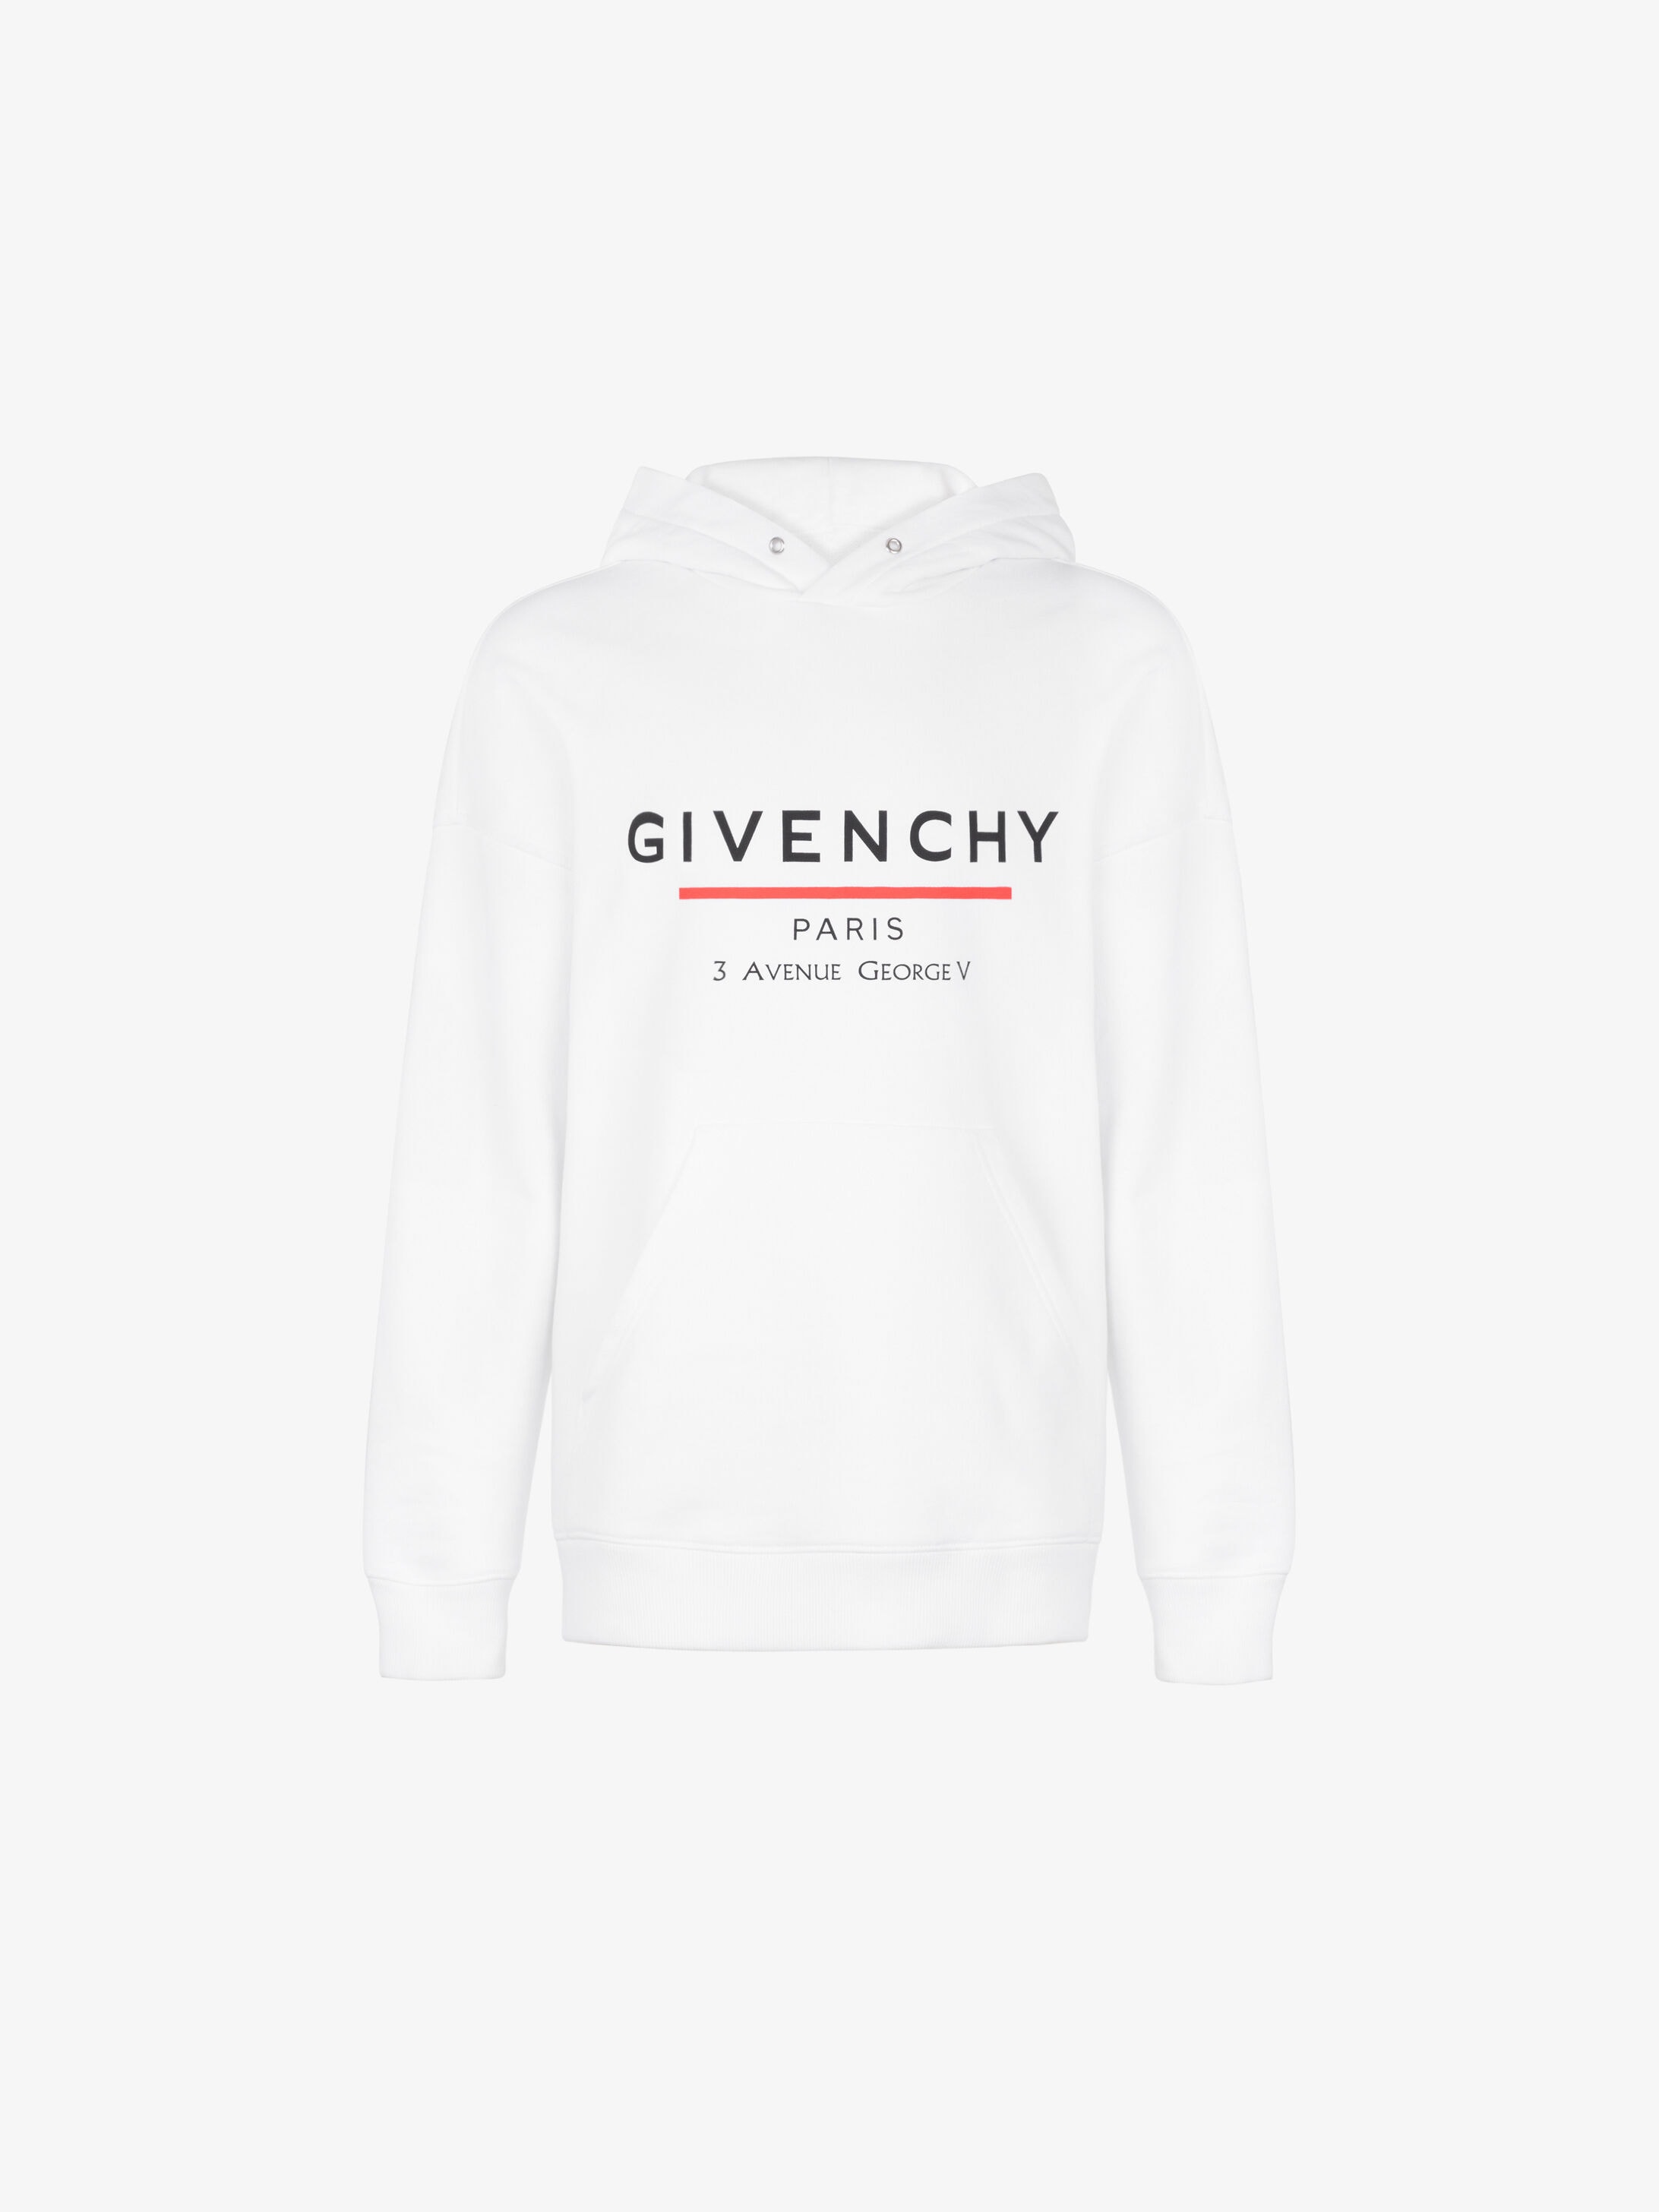 grey givenchy sweatshirt